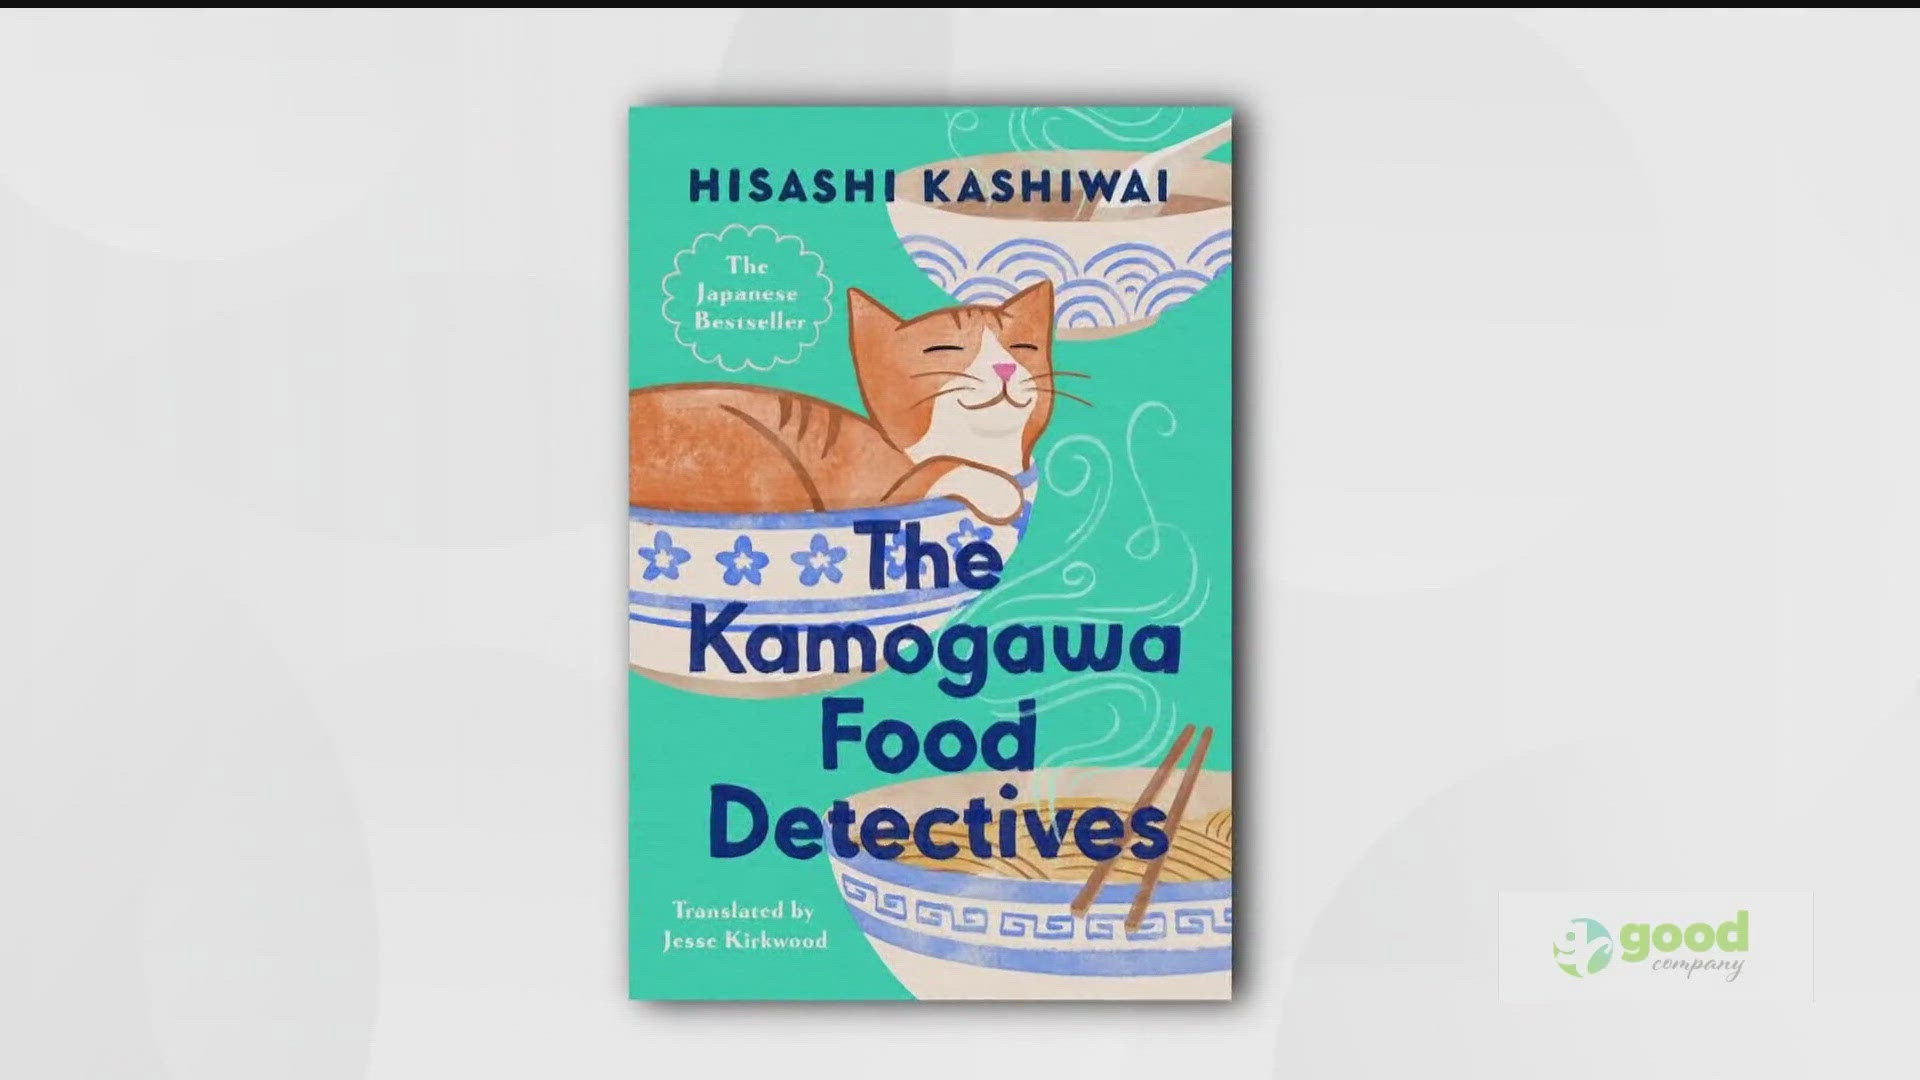 For May, the Good Company Book Club is reading The Kamogawa Food Detectives by Hisashi Kashiwai.